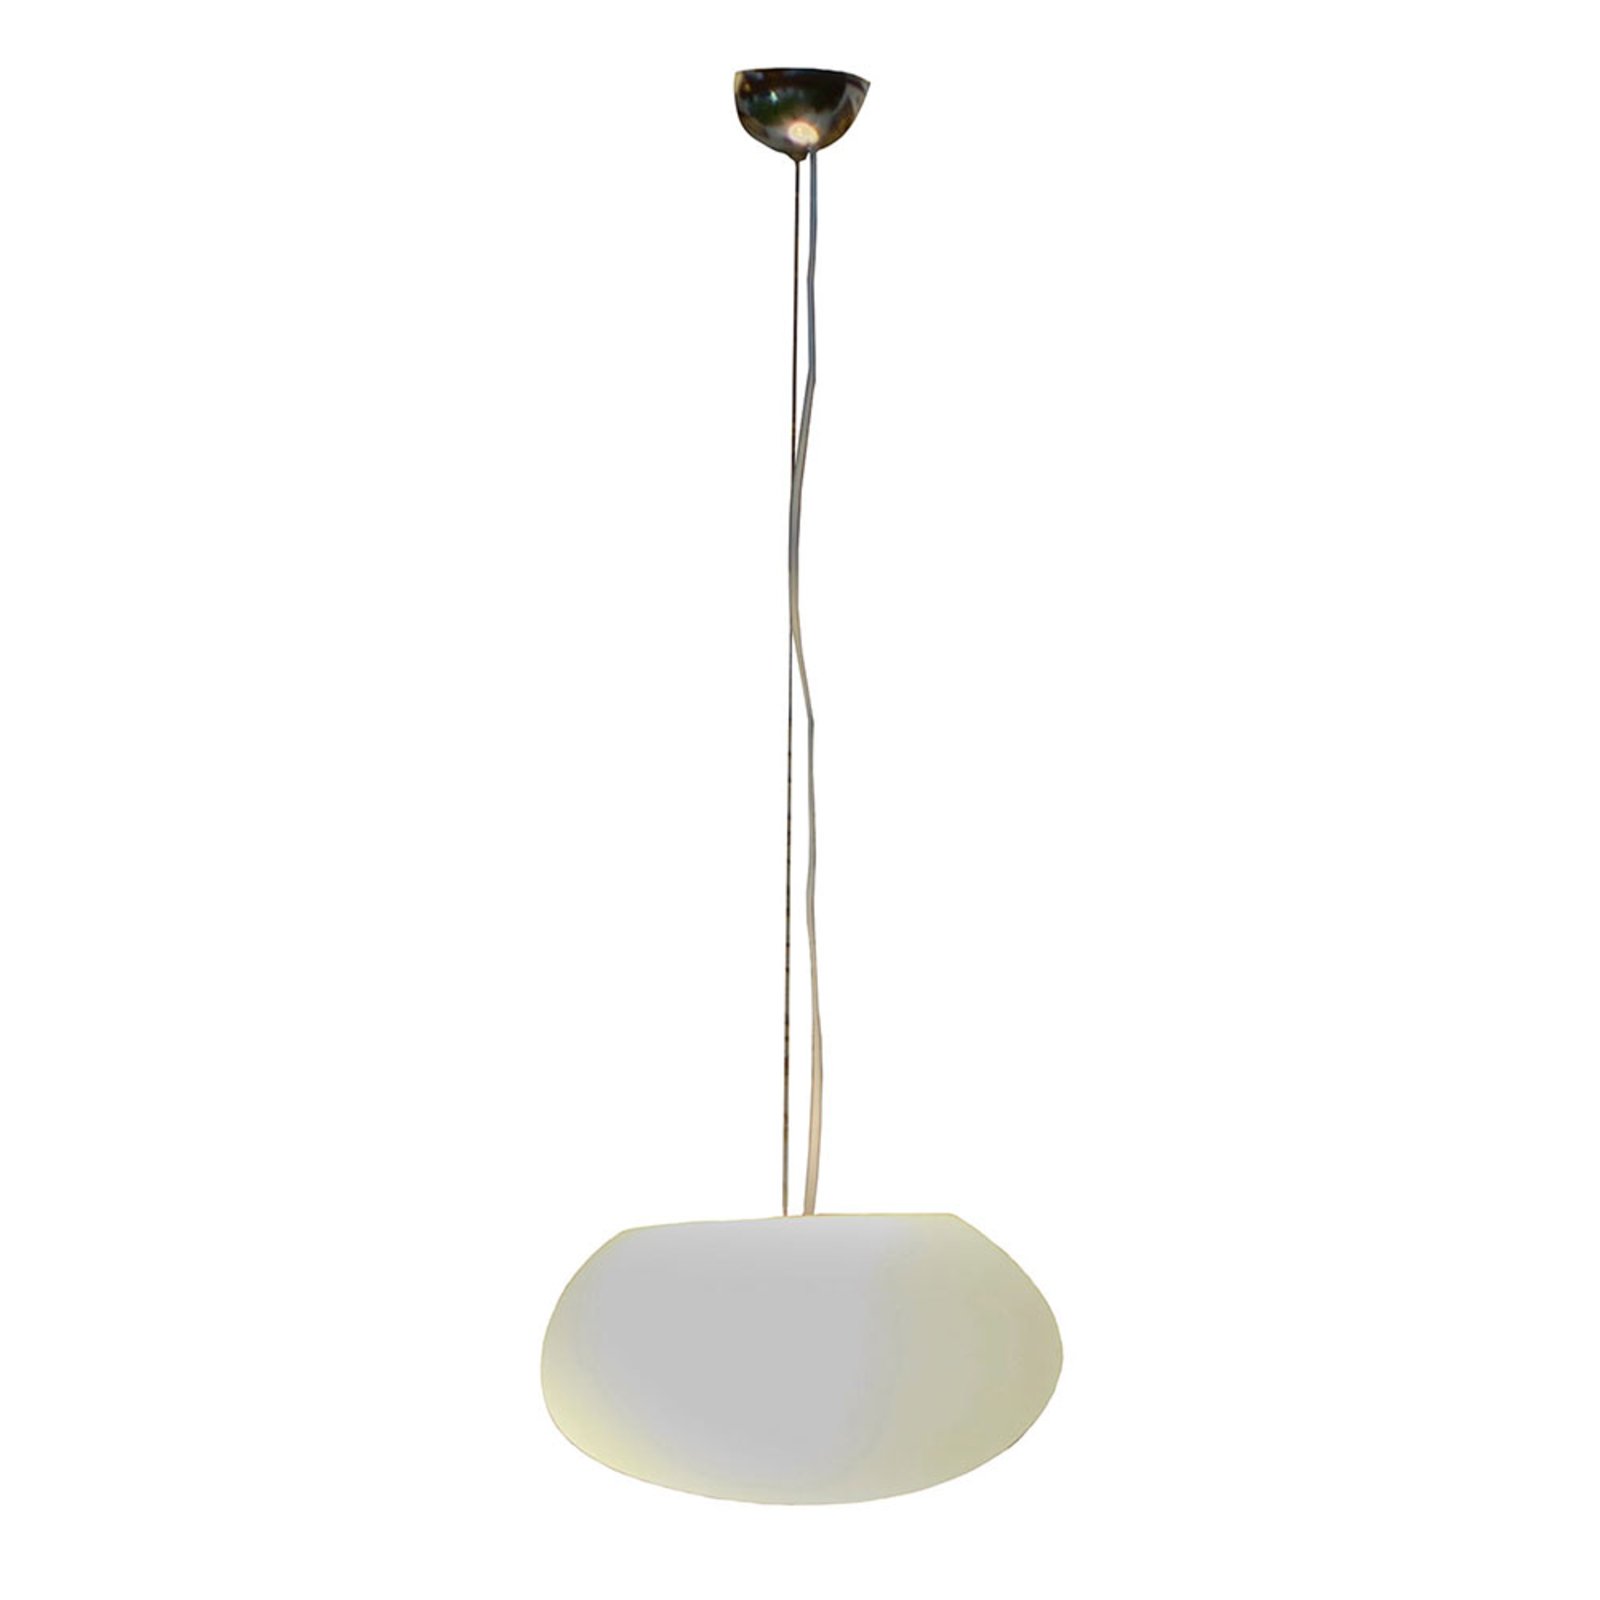 Newgarden Petra 40 hanglamp in Oval Form